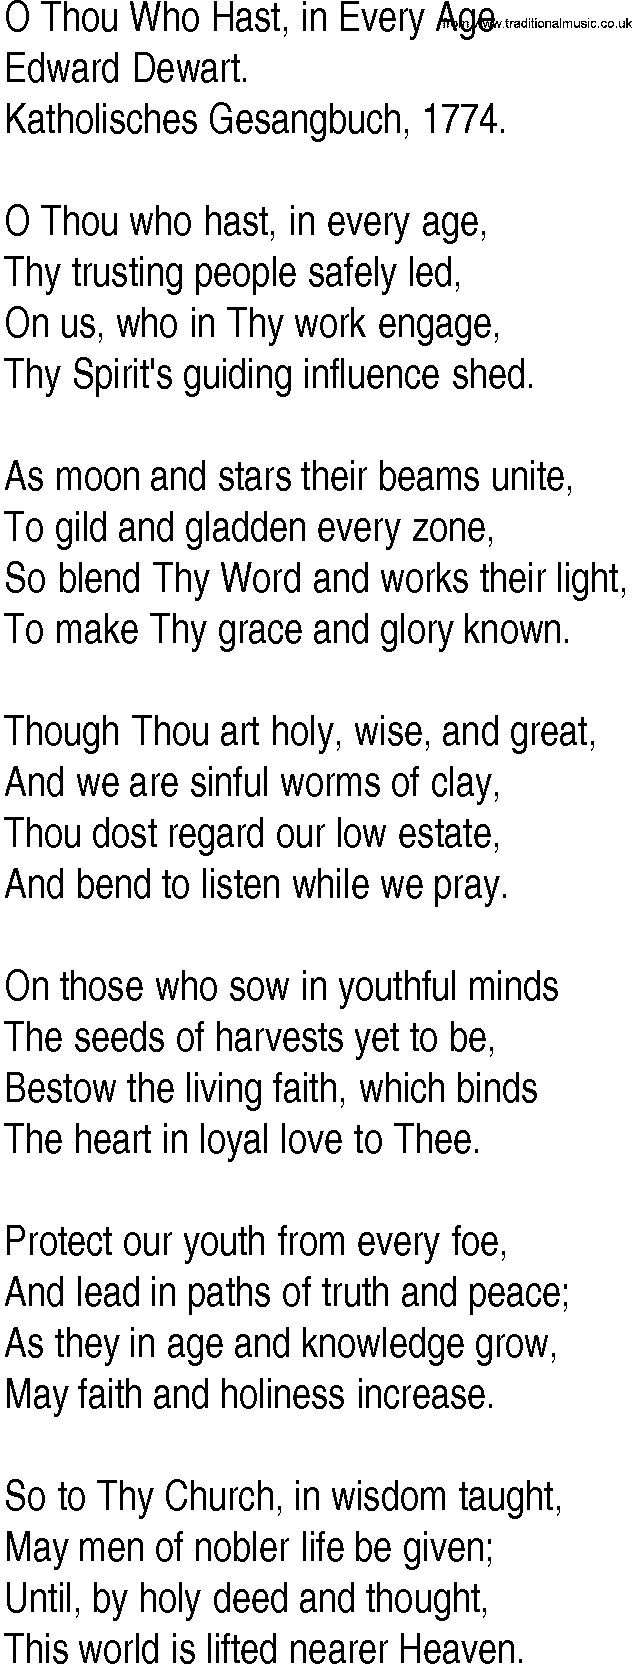 Hymn and Gospel Song: O Thou Who Hast, in Every Age by Edward Dewart lyrics